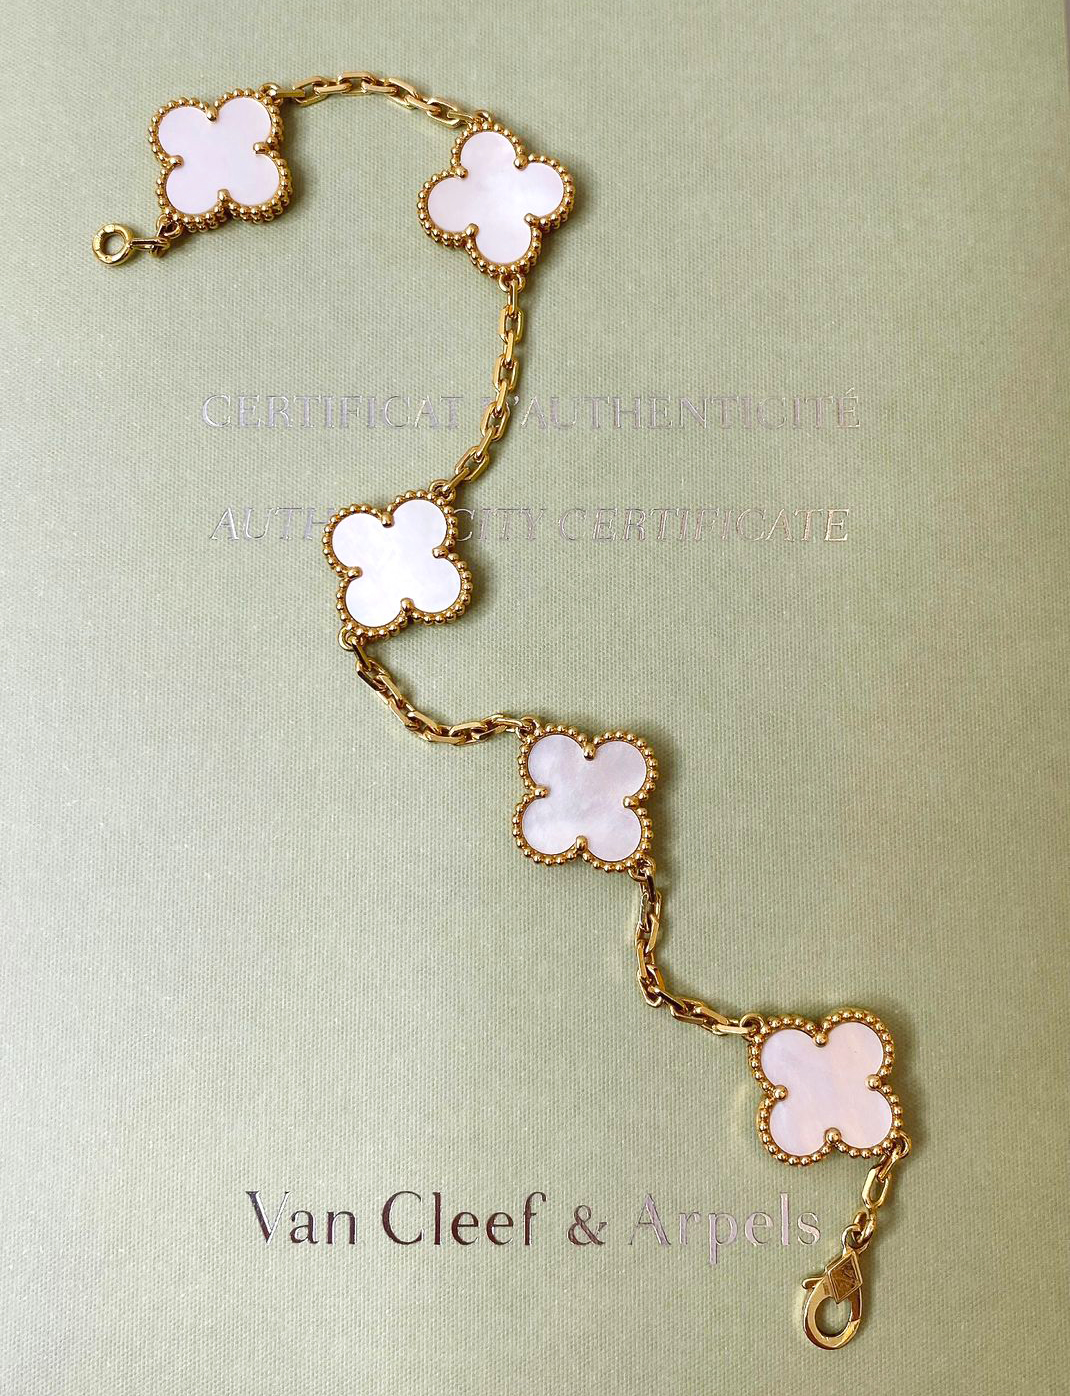 Vintage Alhambra bracelet, 5 motifs 18K yellow gold, Mother-of